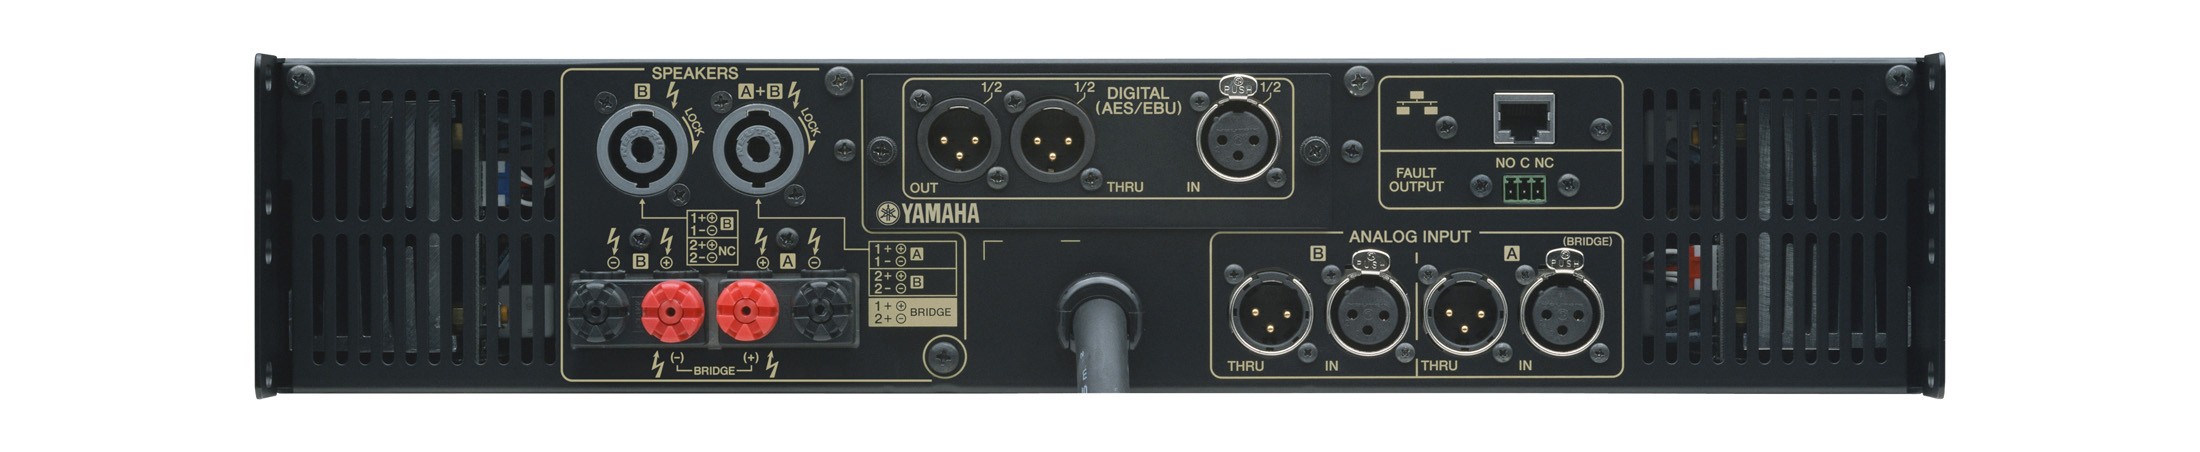 Yamaha TX5n